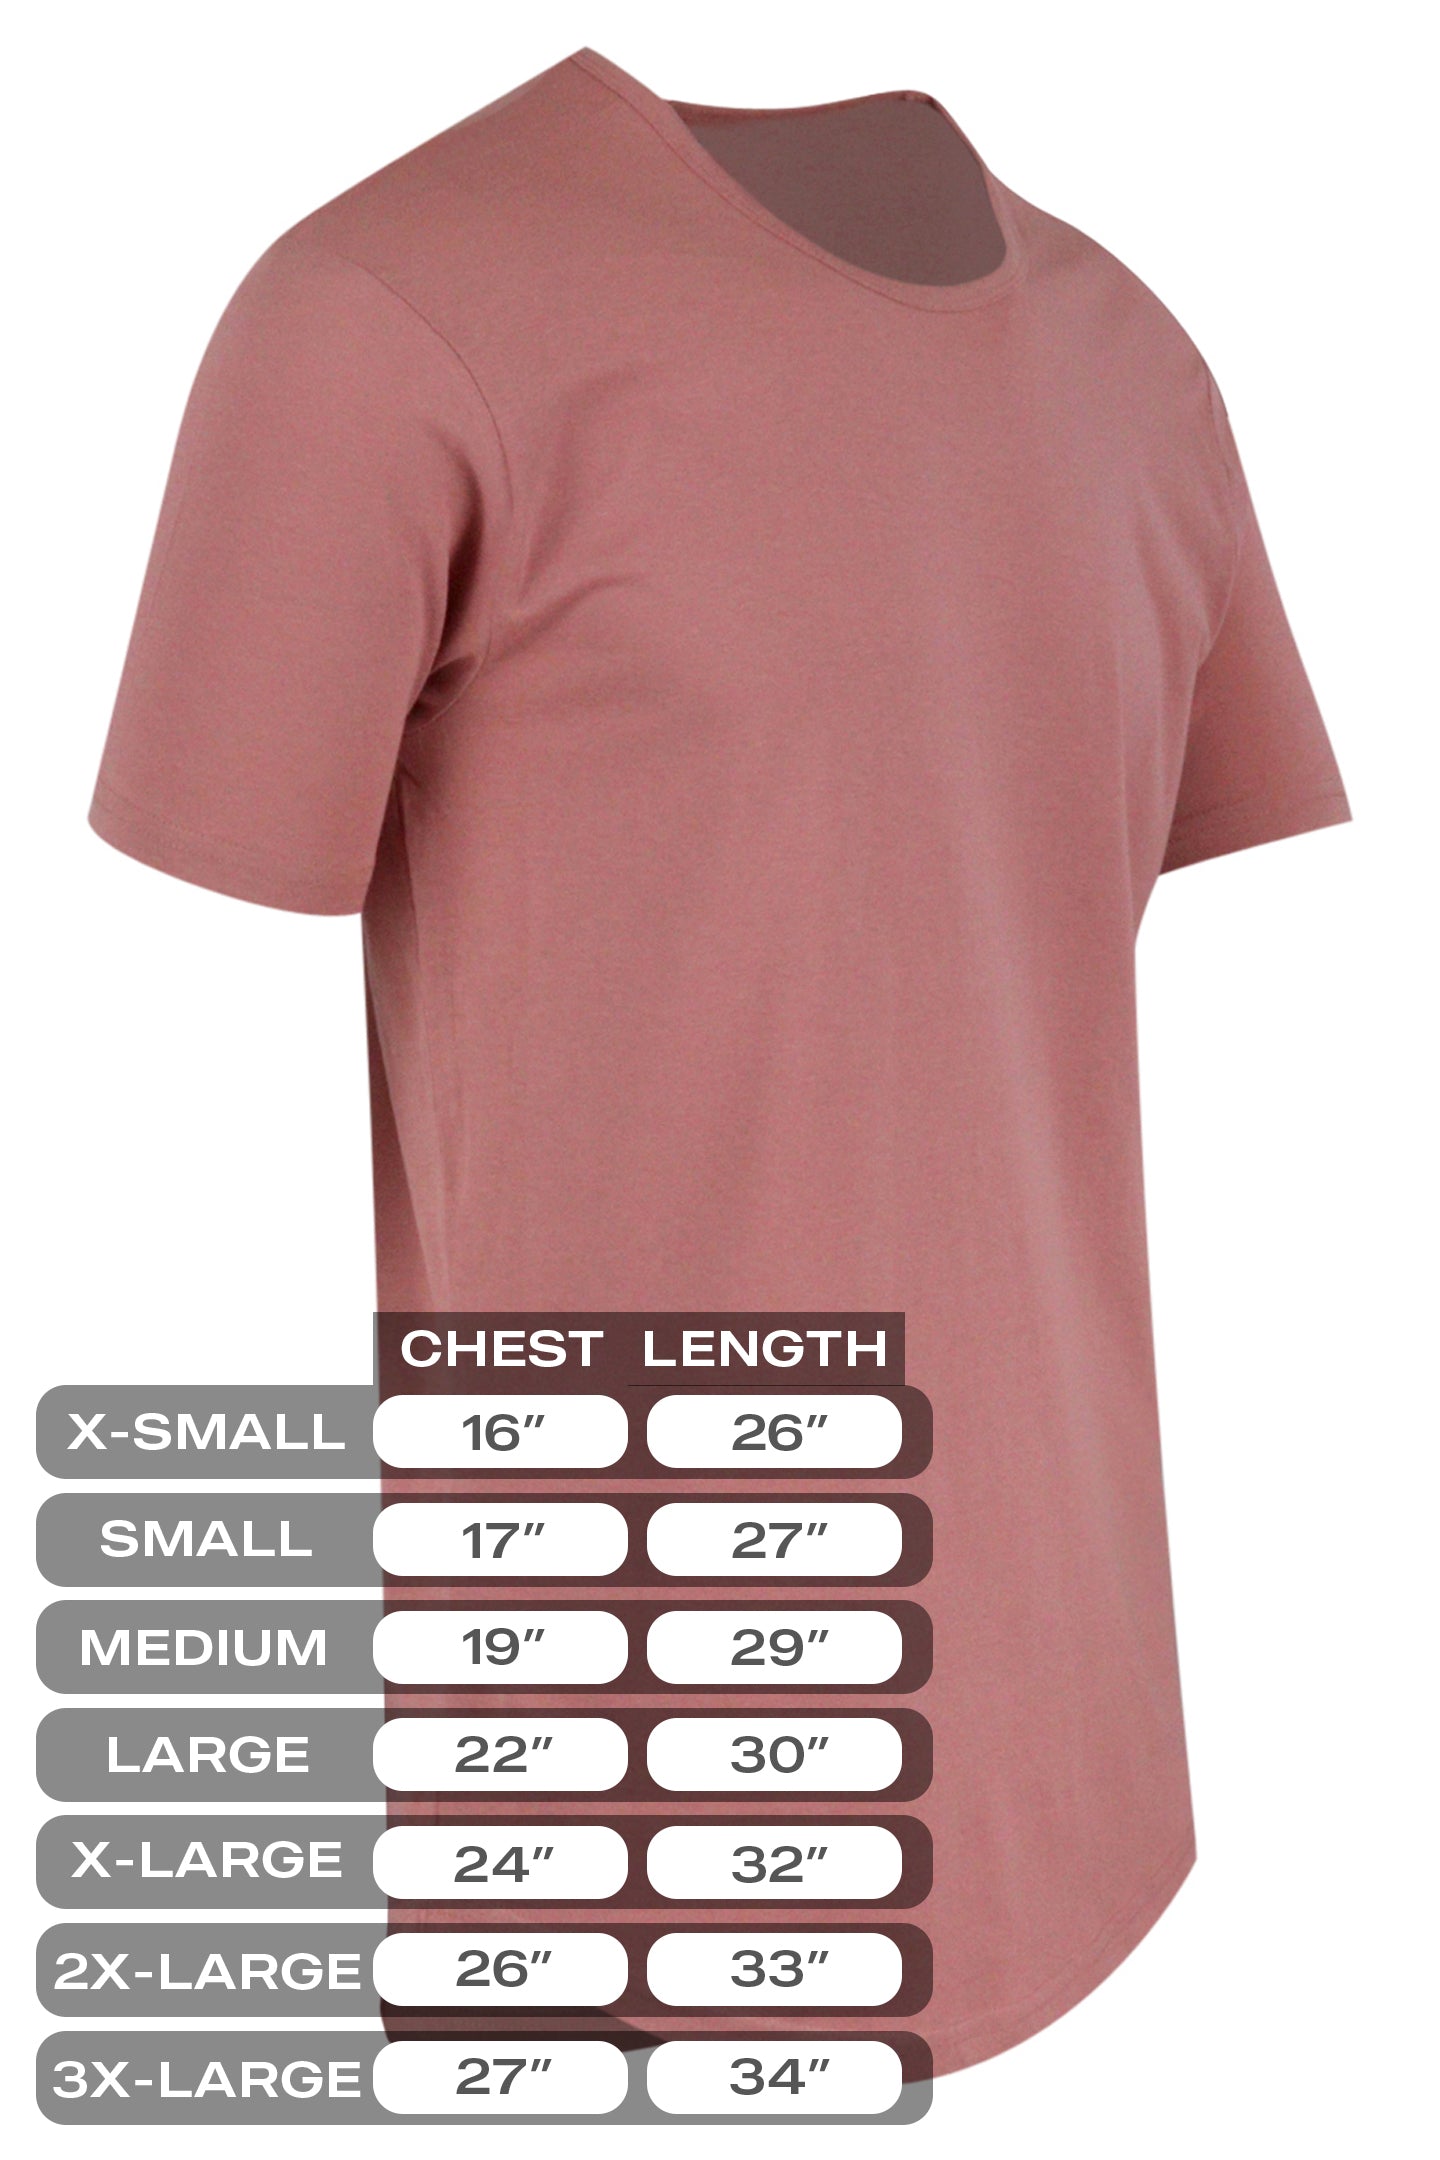 Drop Cut Shirts - Multi Color 3 Packs